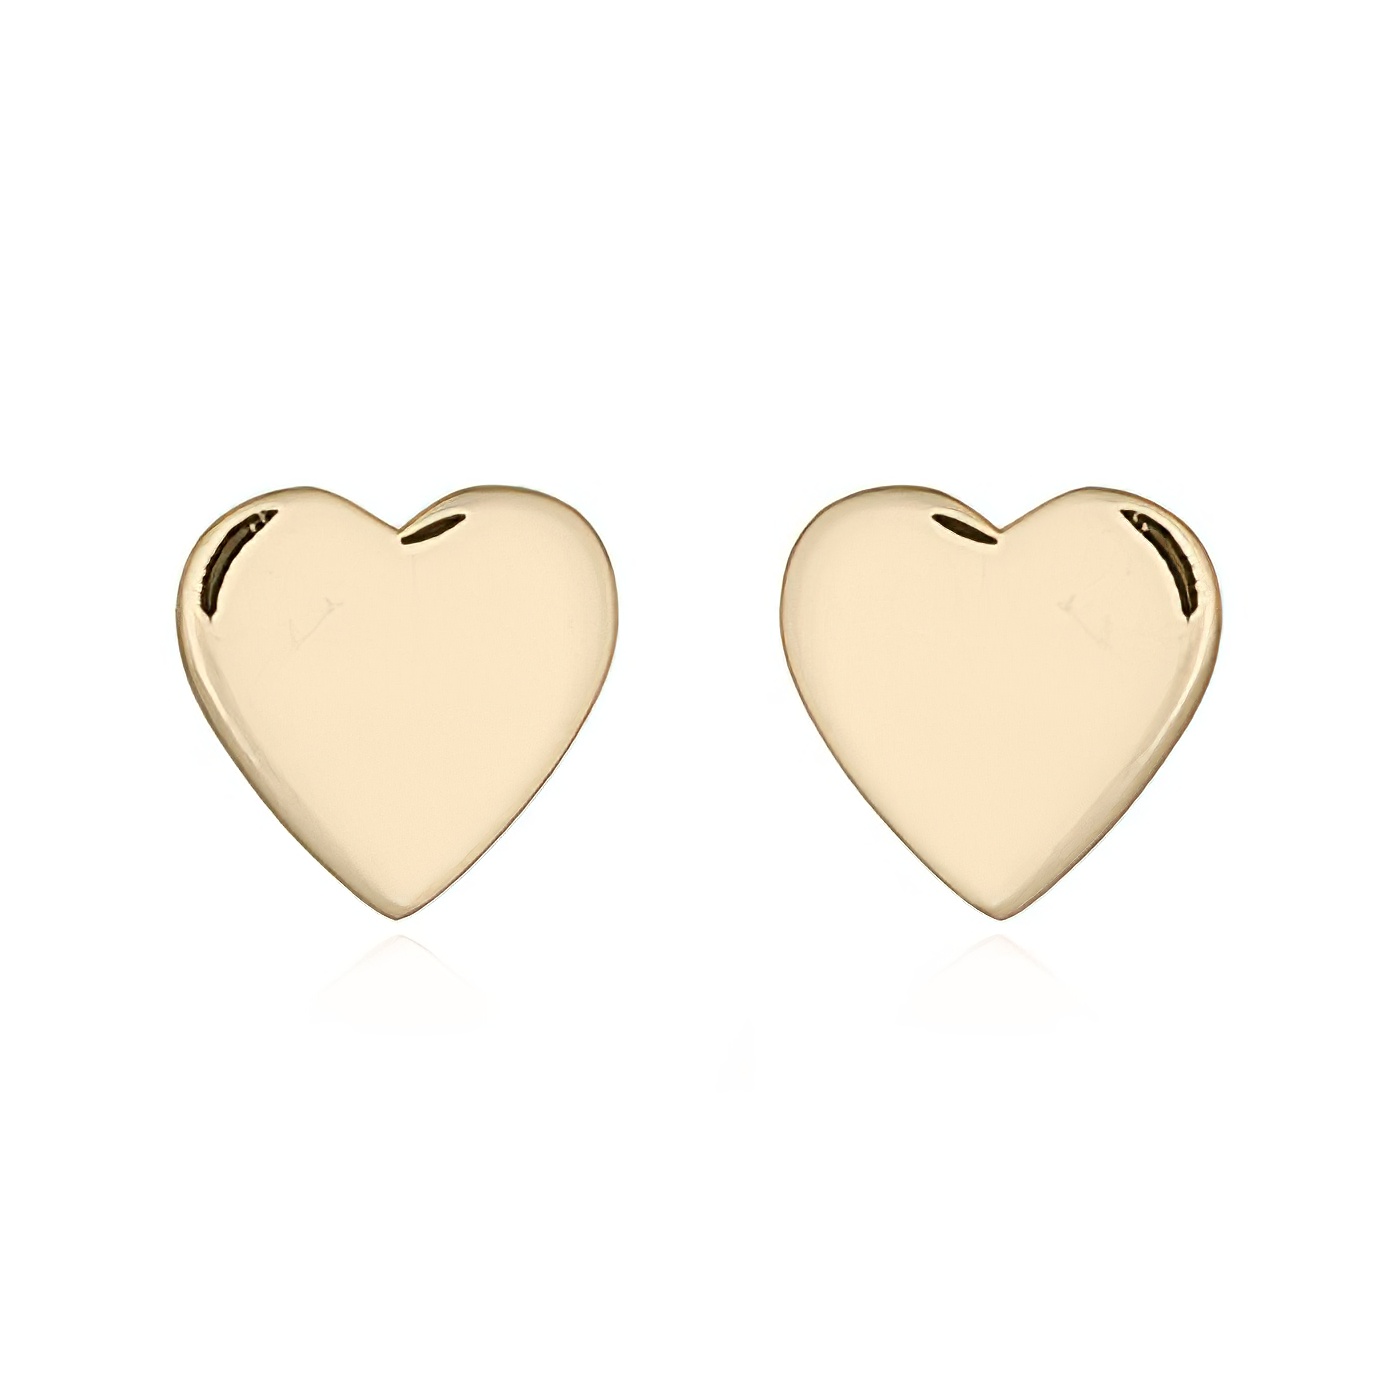 Little Plain Heart Silver 925 Stud Yellow Gold Plated Earrings by BeYindi 